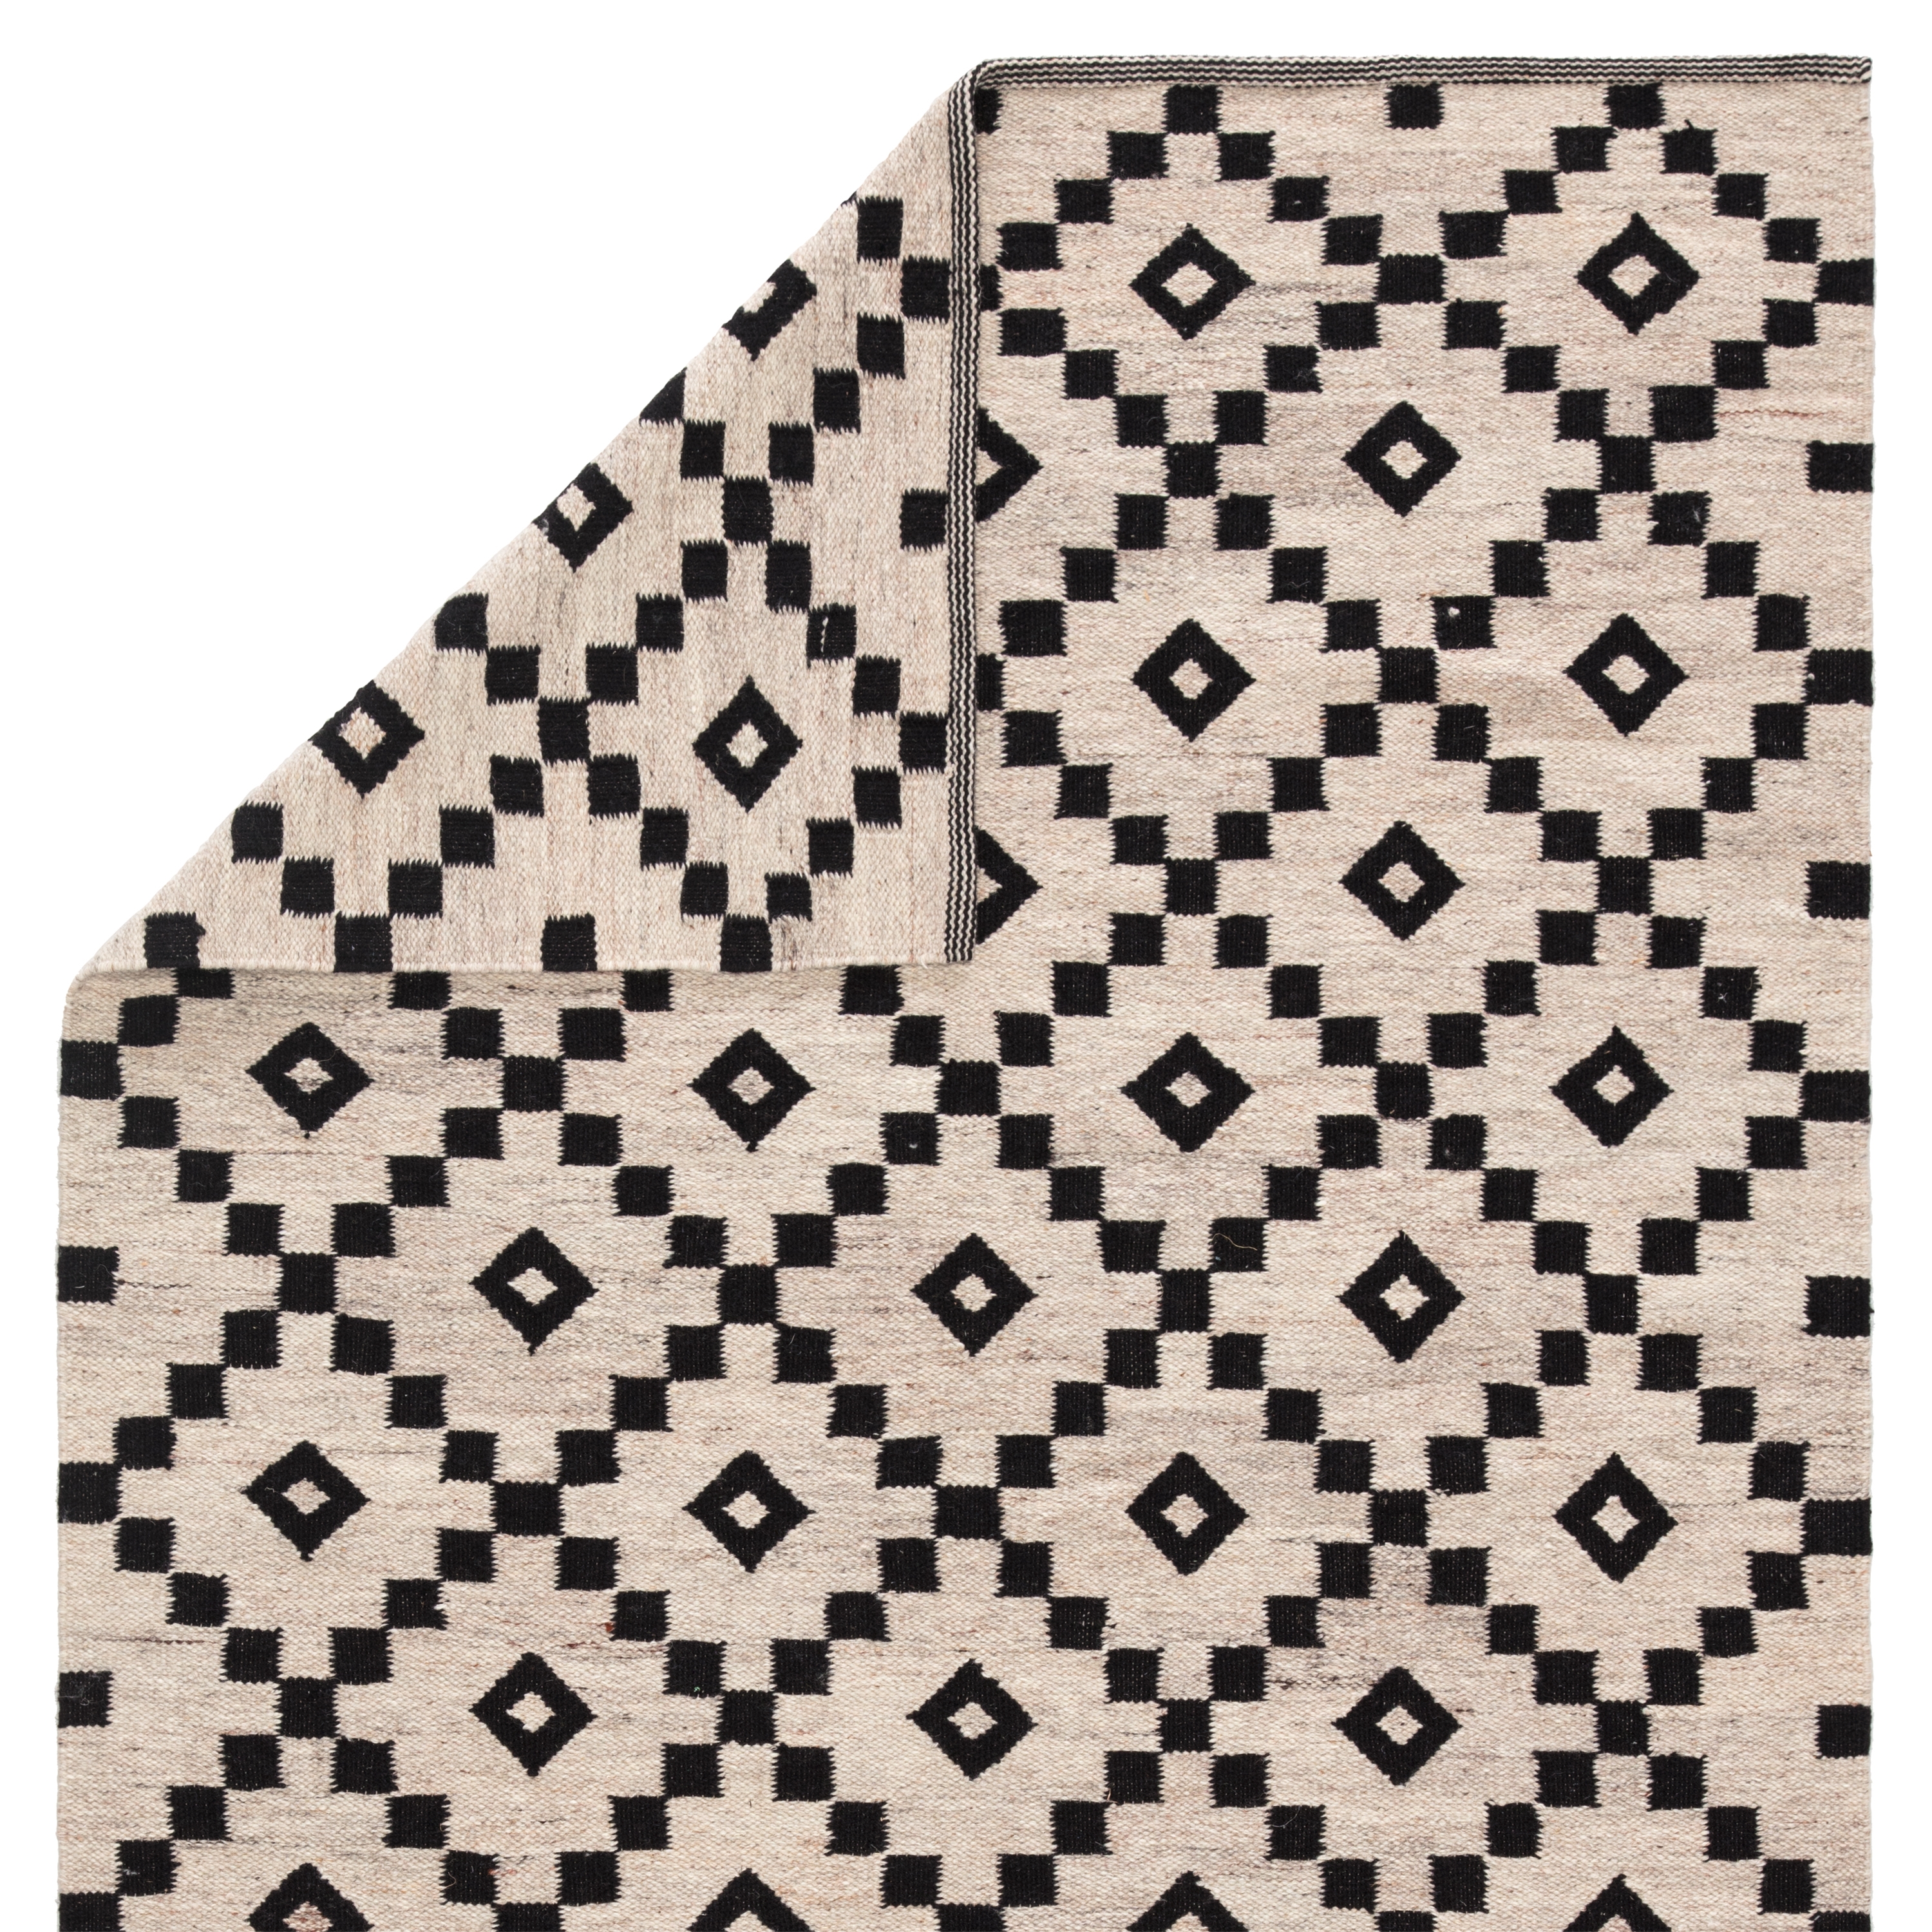 Croix Handmade Geometric Runner Rug, Black & White, 2'6" x 8' - Image 2